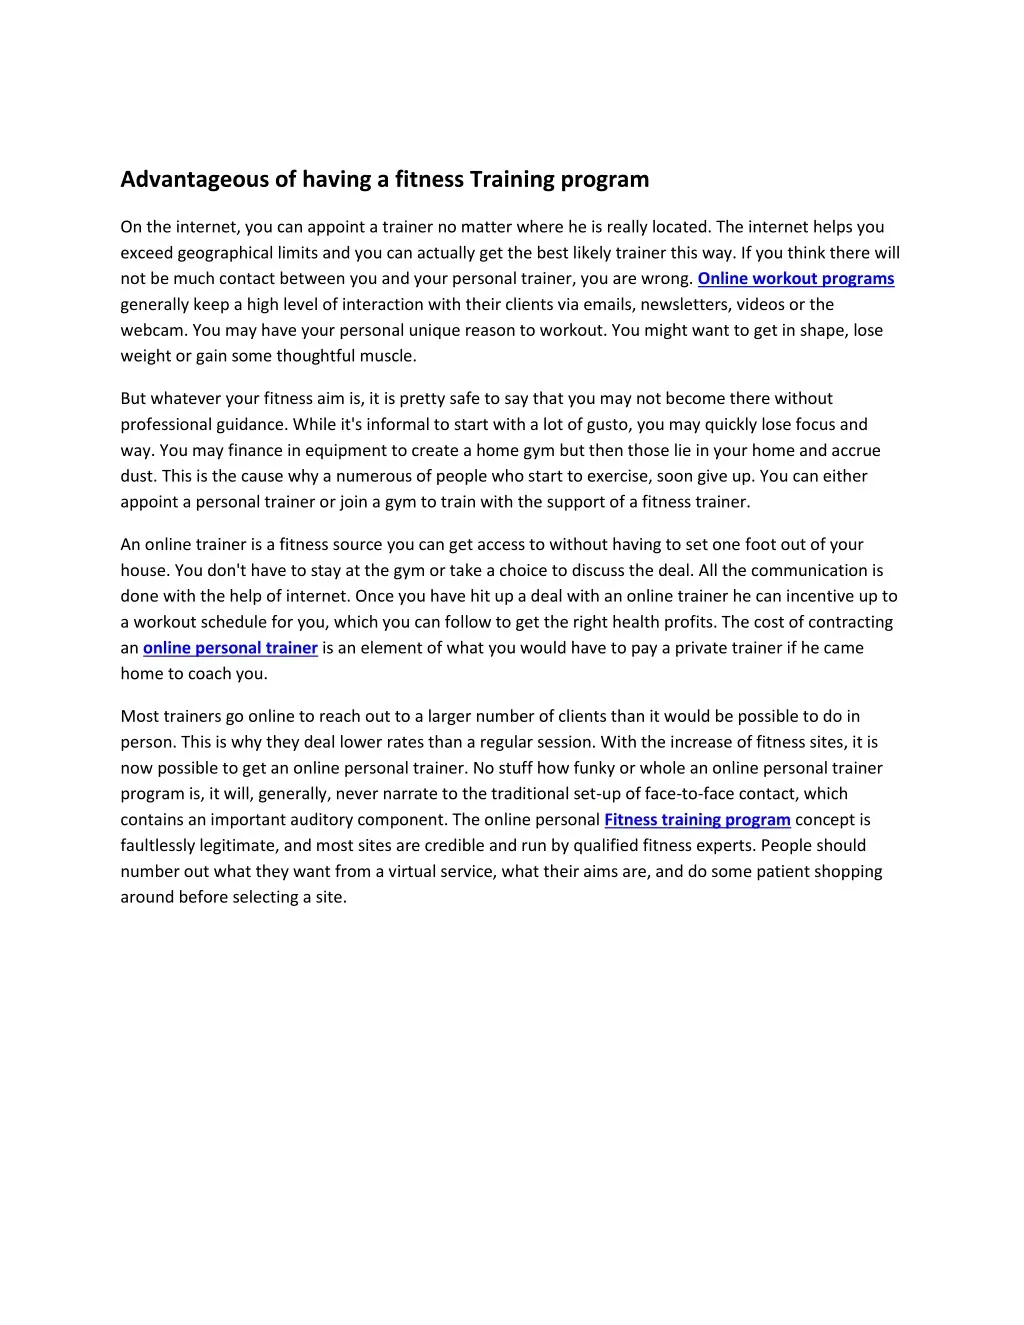 advantageous of having a fitness training program